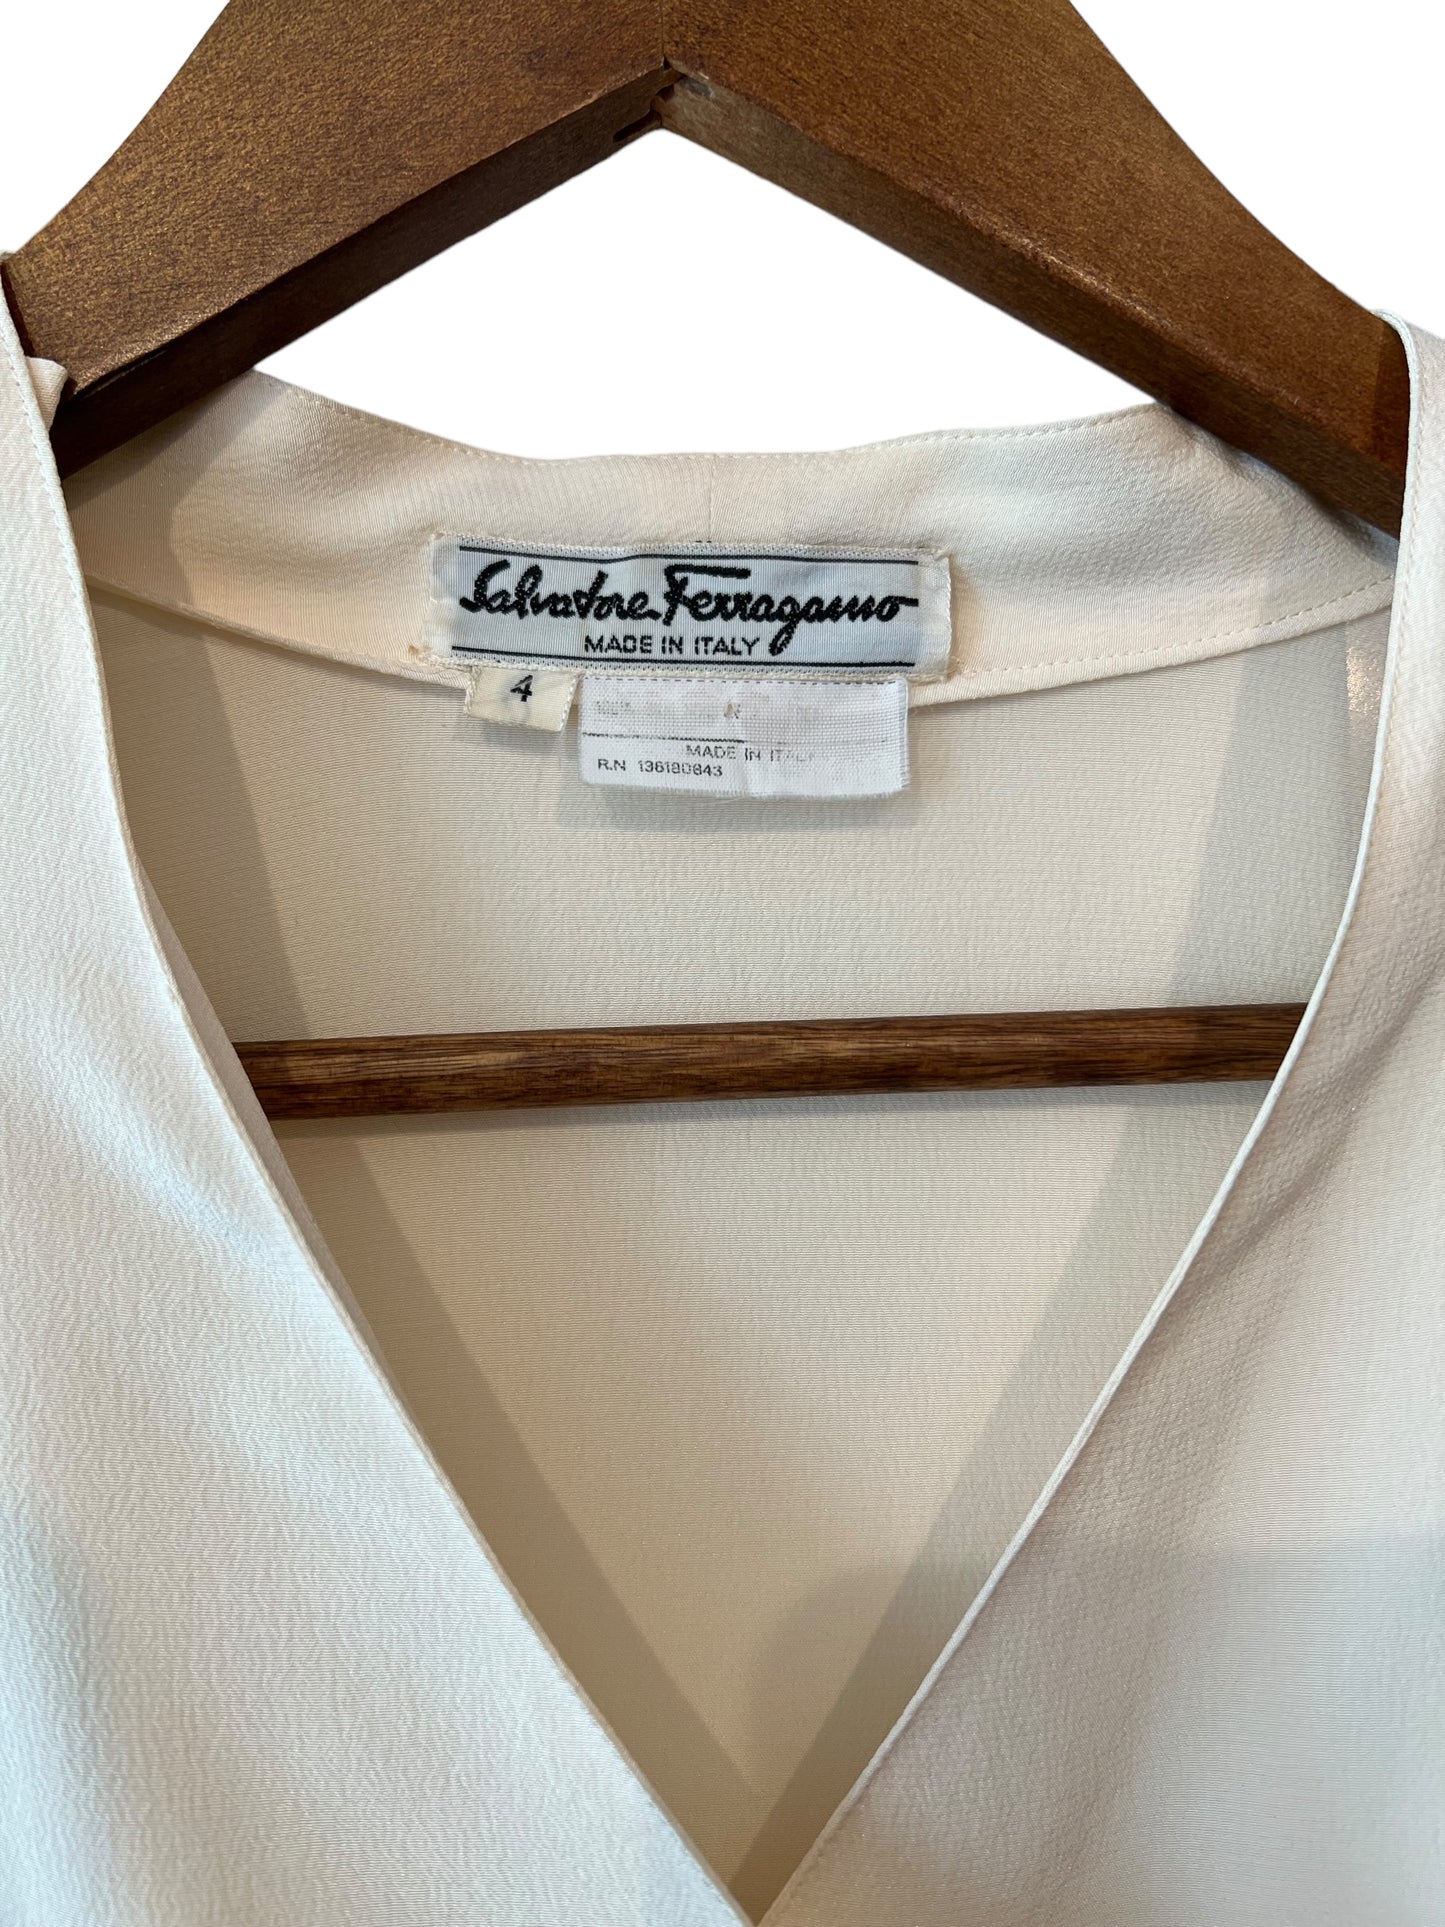 ferragamo vintage silk blouse